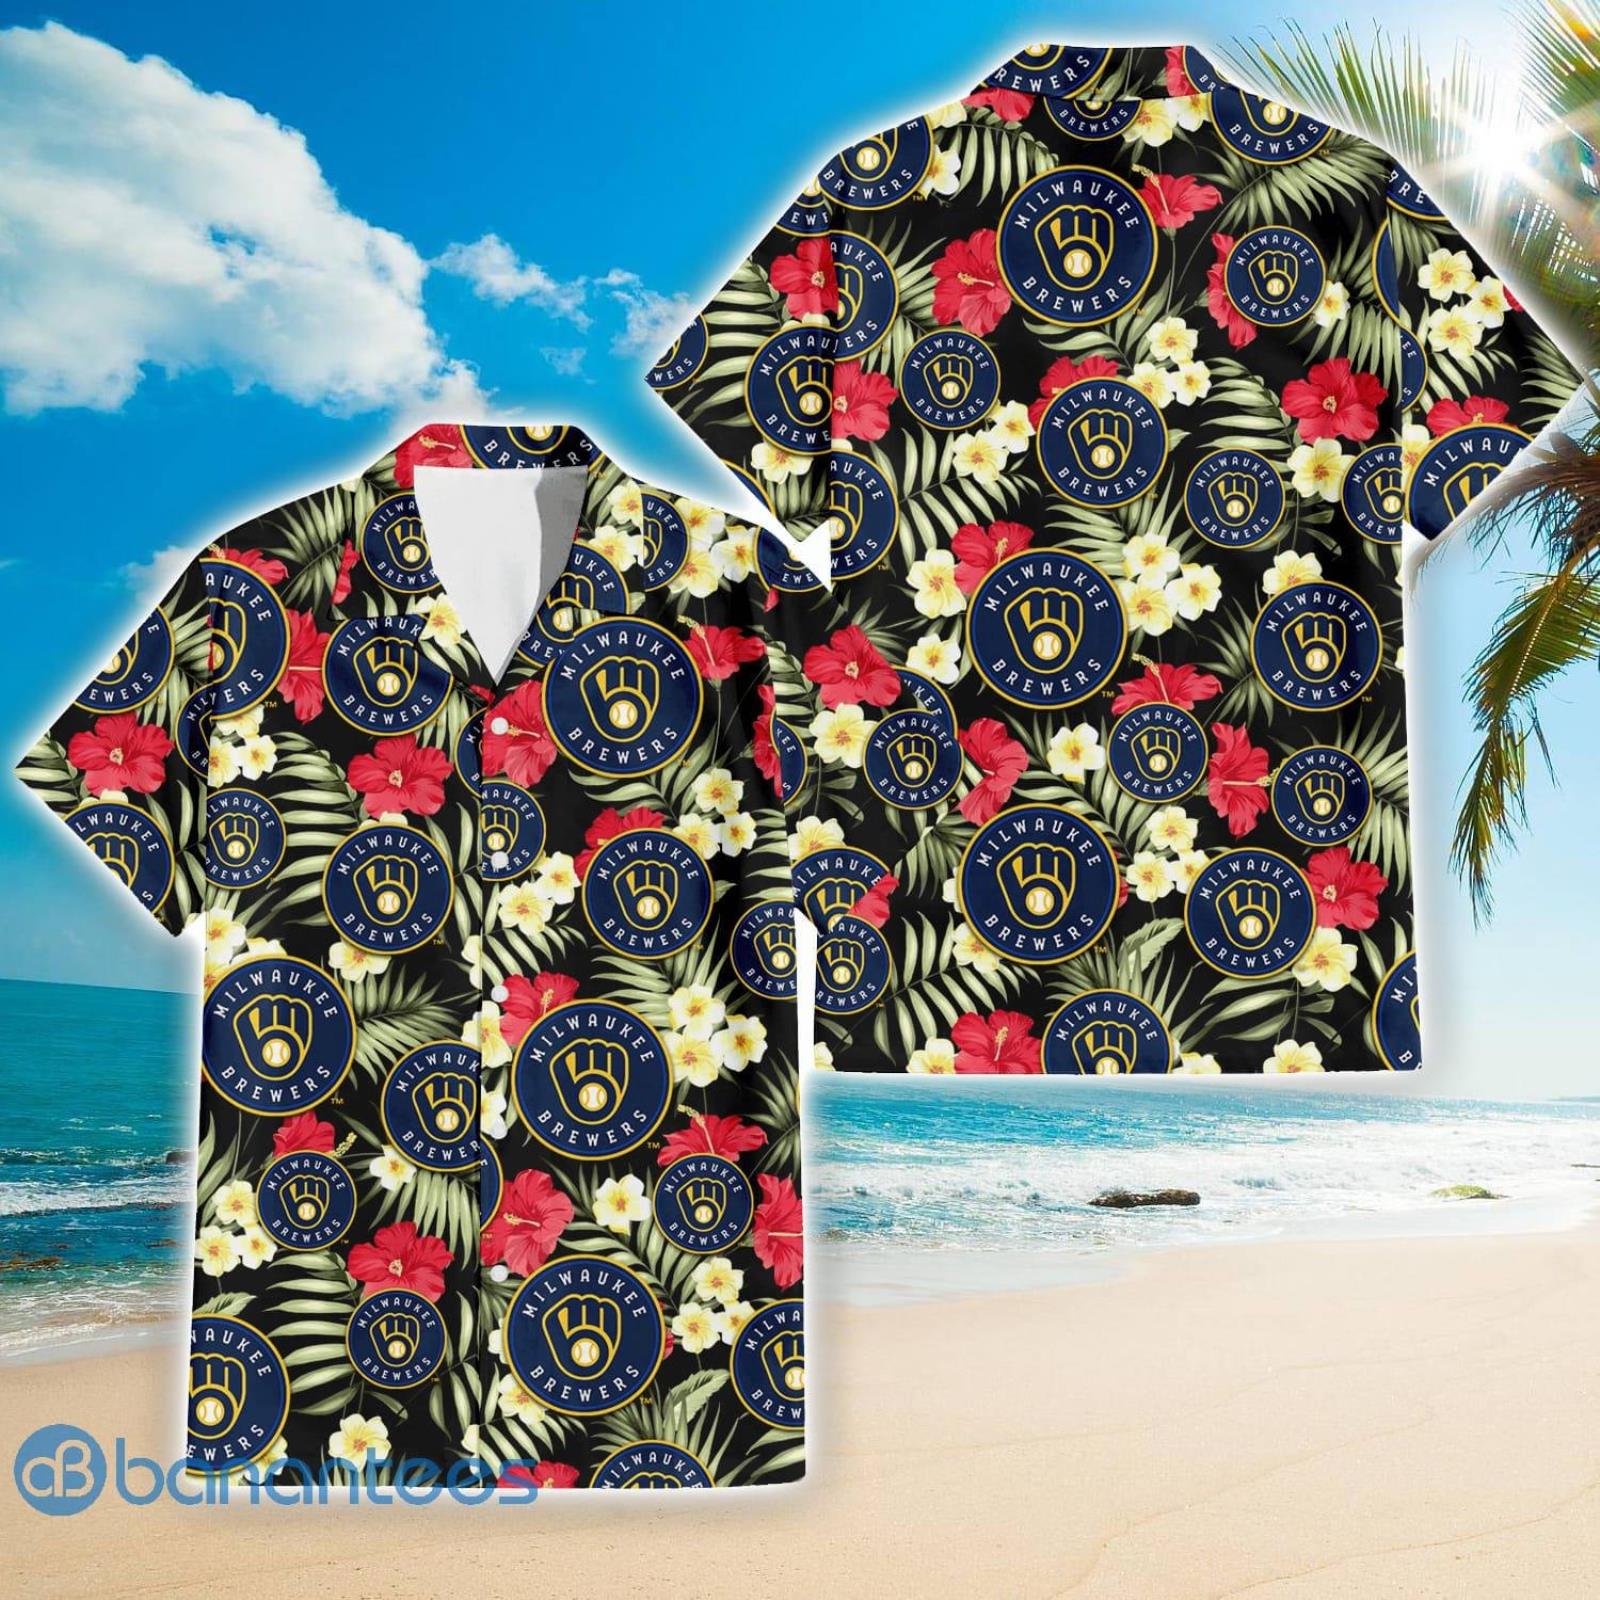 2023 Flower and Palm Trees Hawaiian Shirt - Milwaukee Brewers